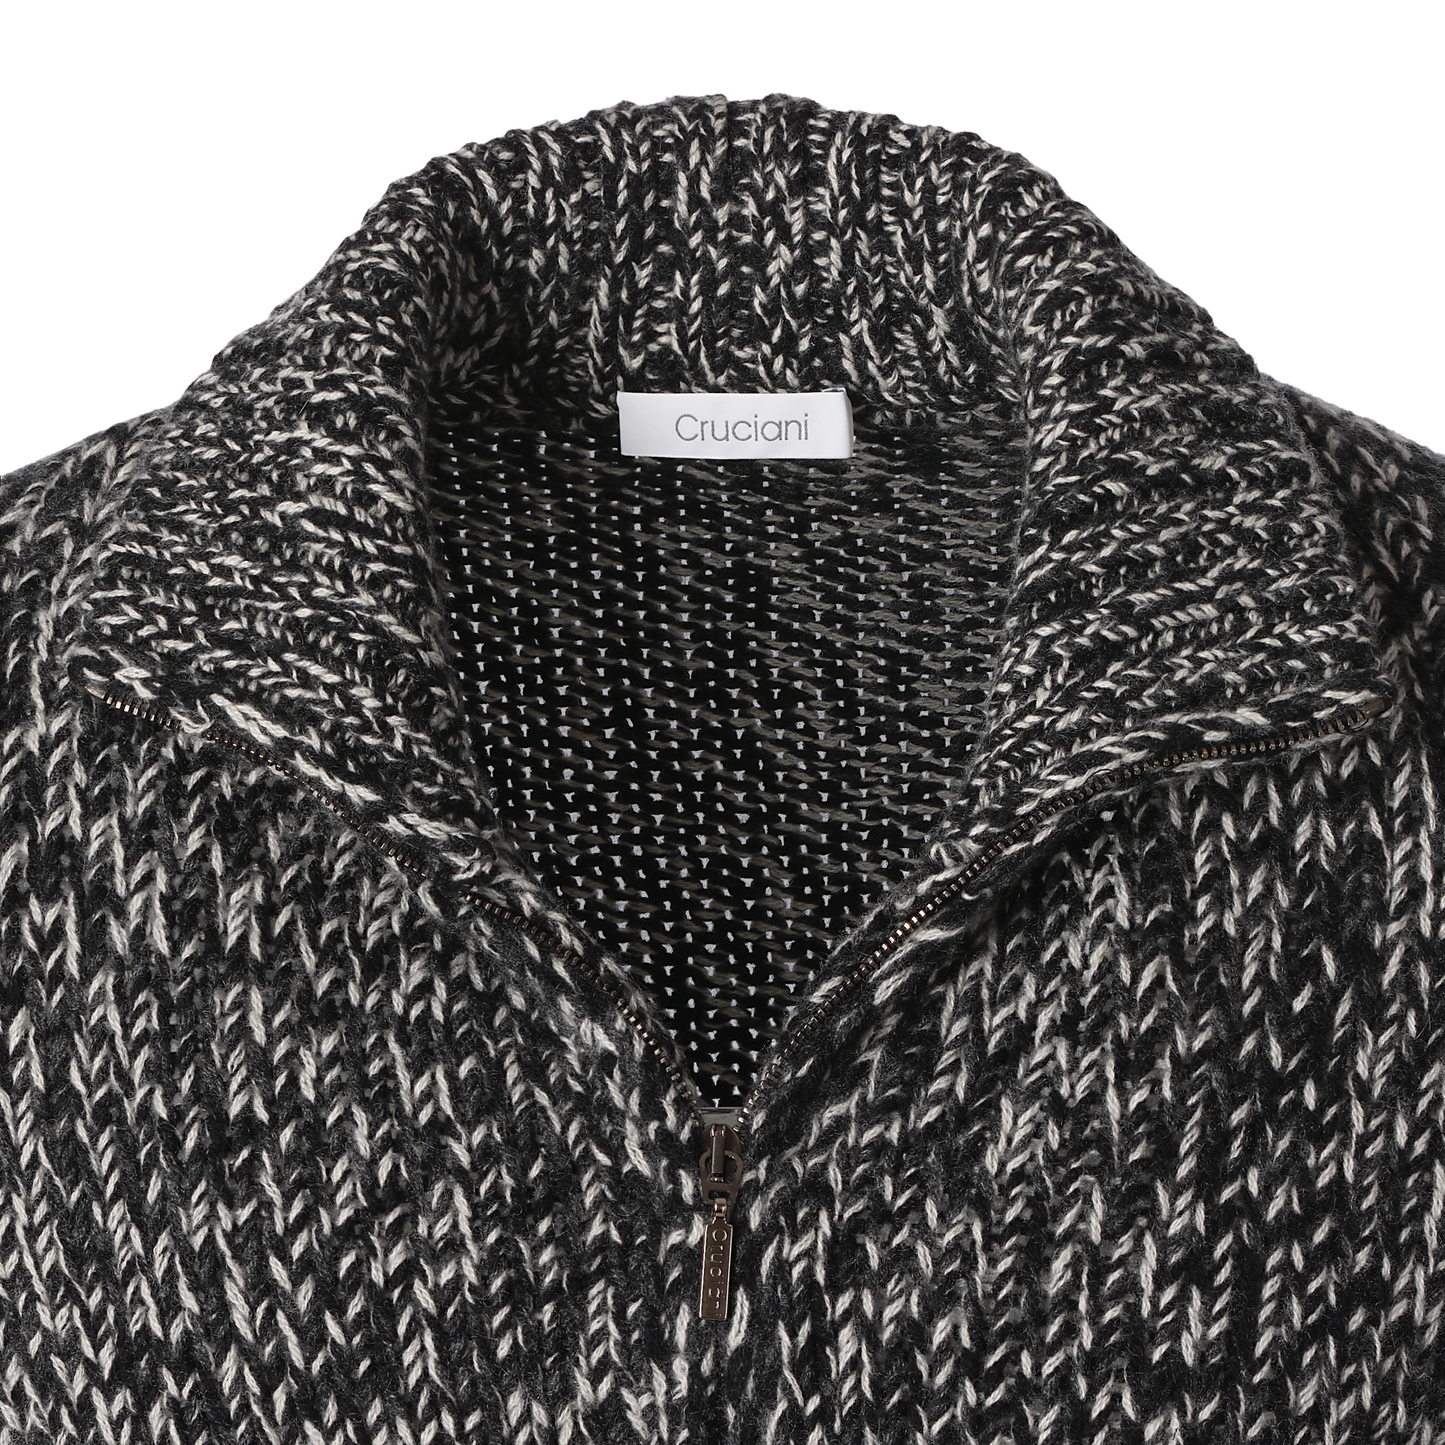 Cruciani Melange Cashmere Turtleneck Zip-Up Sweater in Black - SARTALE